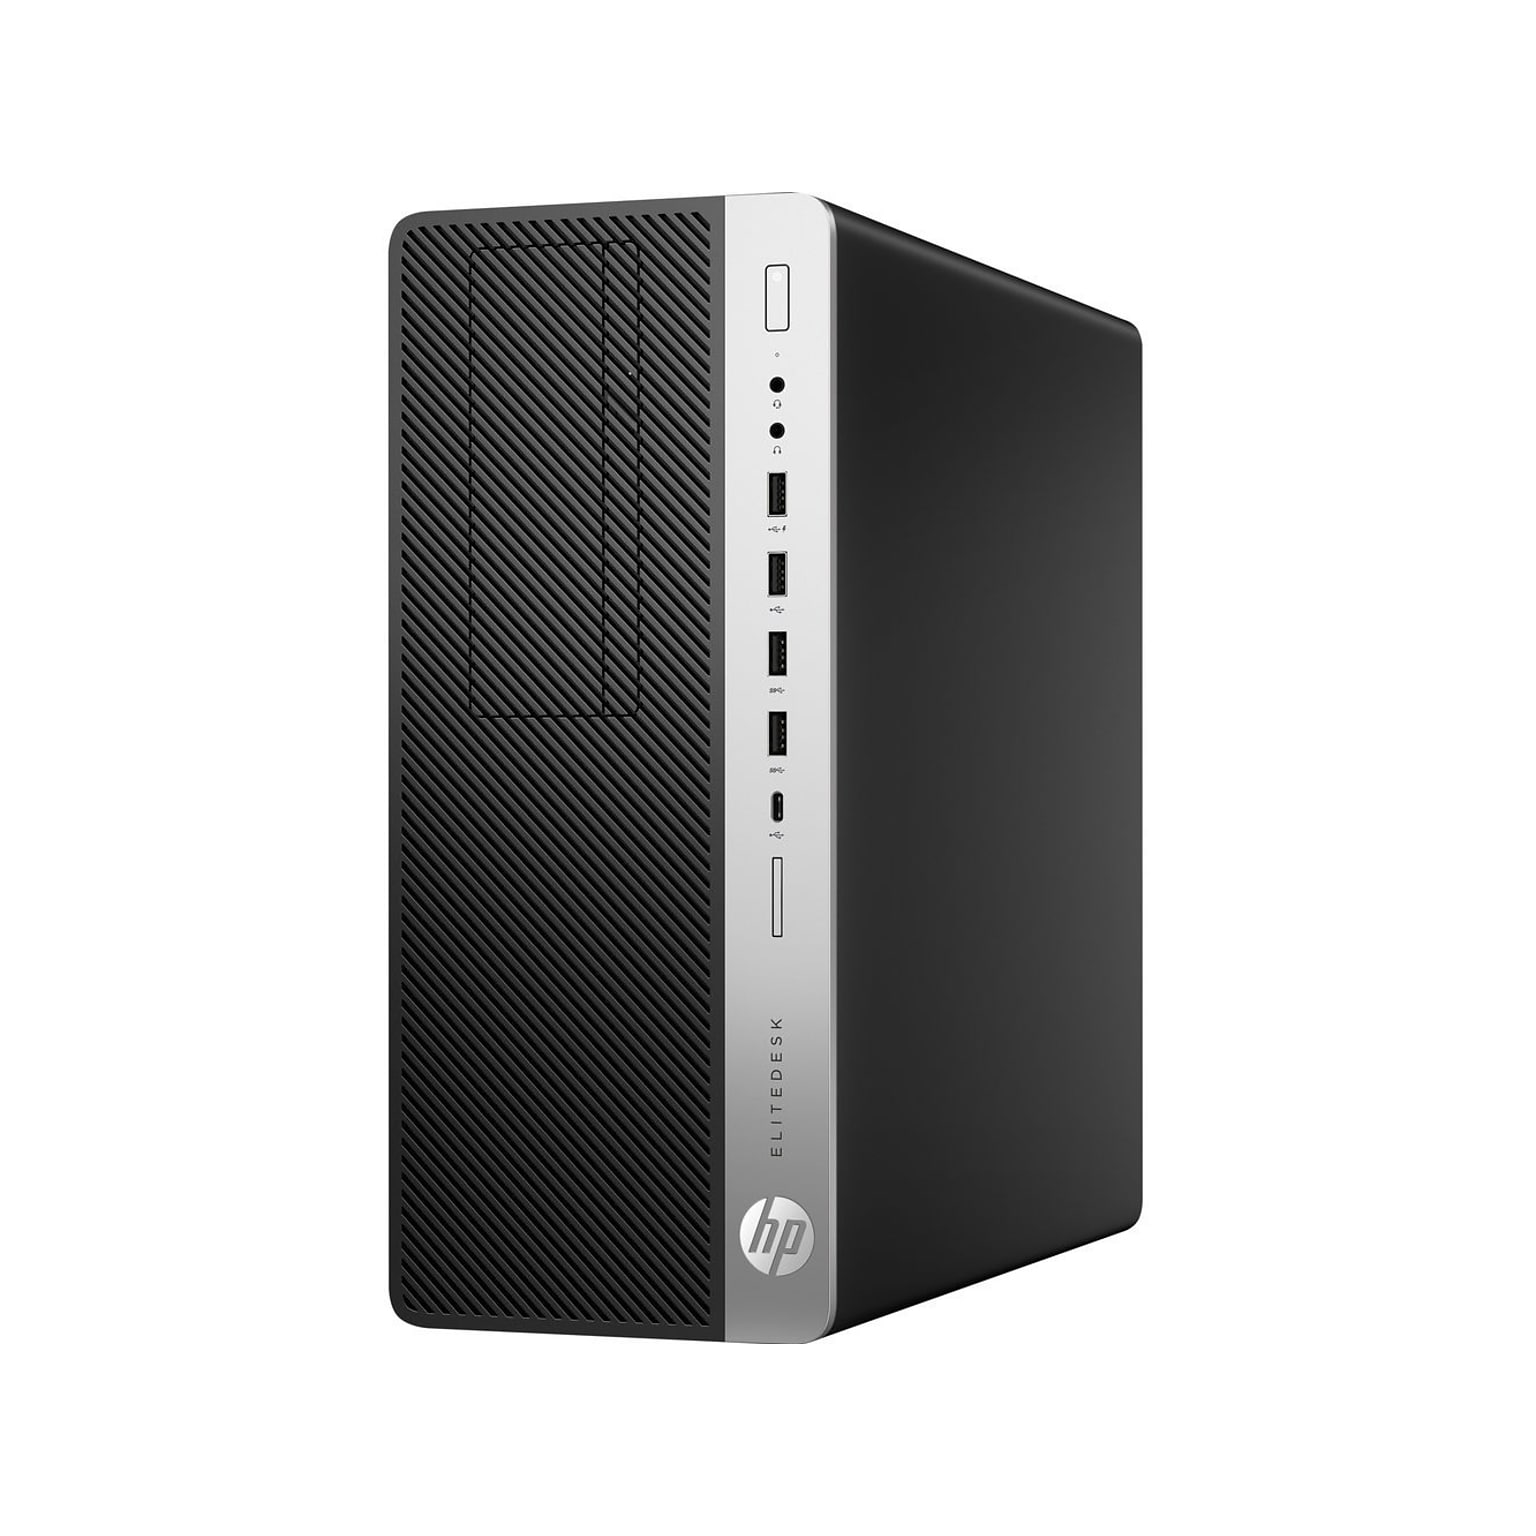 HP EliteDesk 800 G3 Refurbished Desktop Computer, Intel Core i5-6400T, 32GB Memory, 512GB SSD (2DR52UT#ABA)